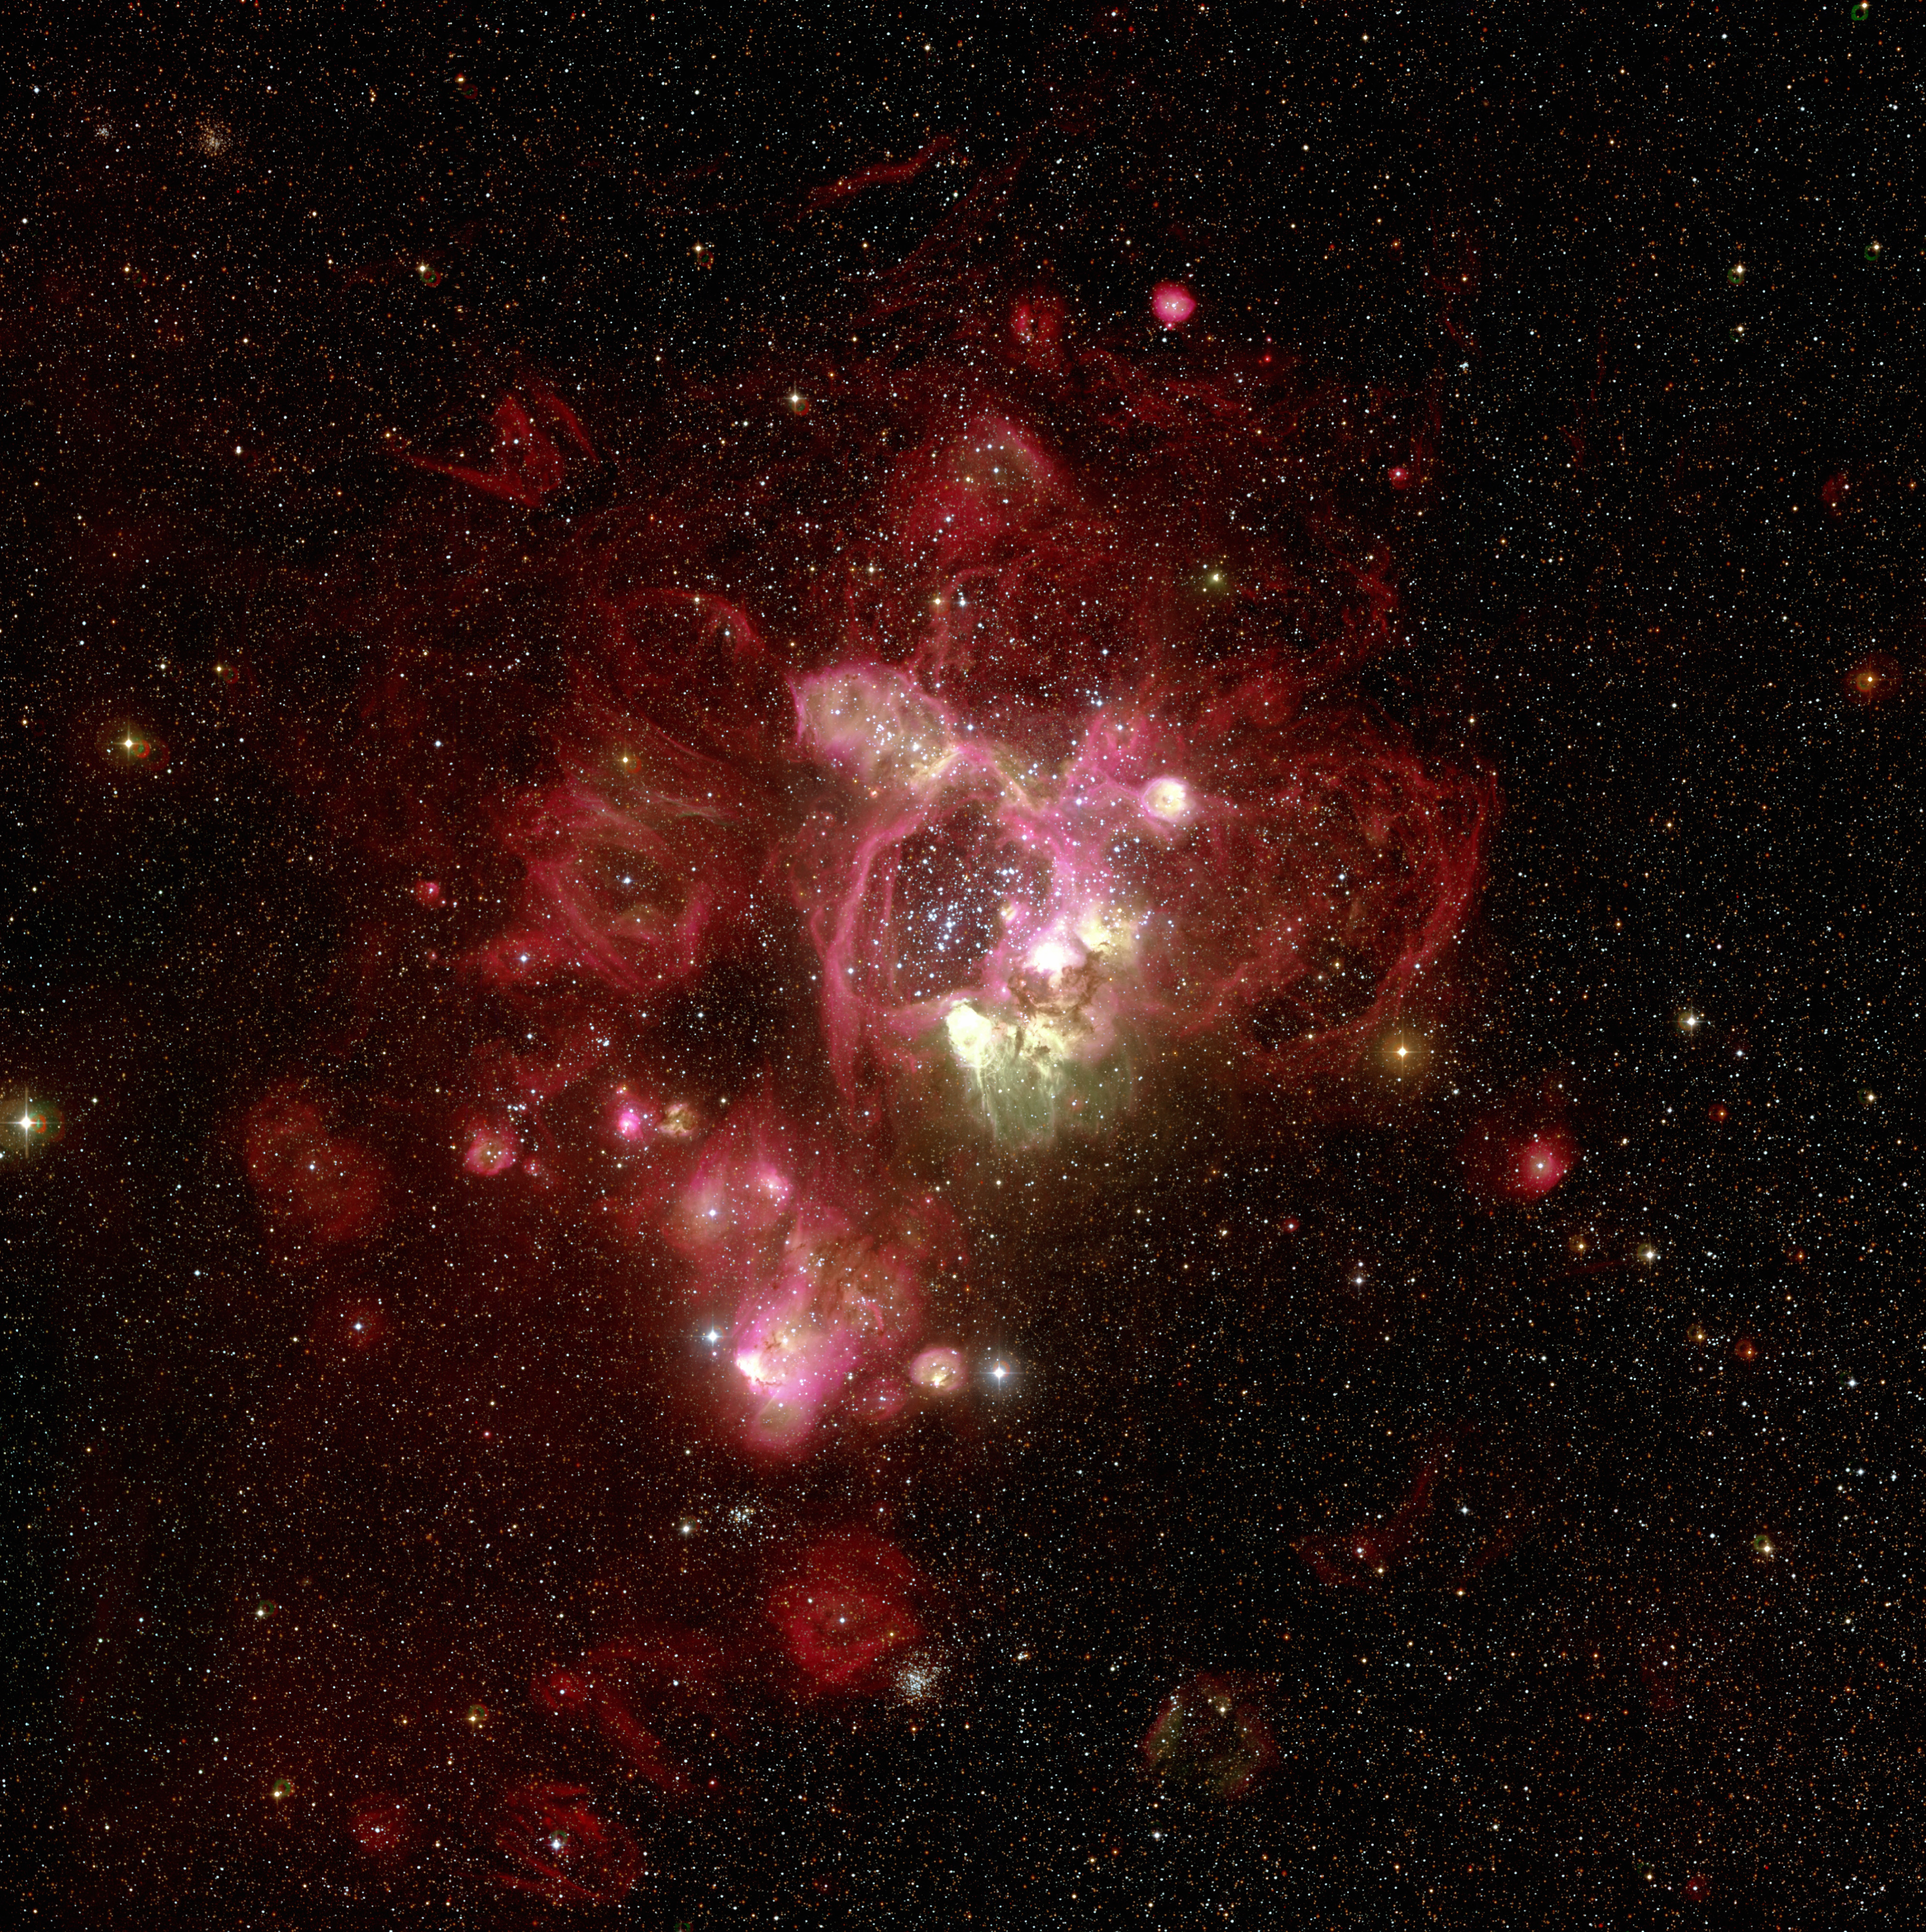 ESO-N44-LMC-phot-31a-03-hires